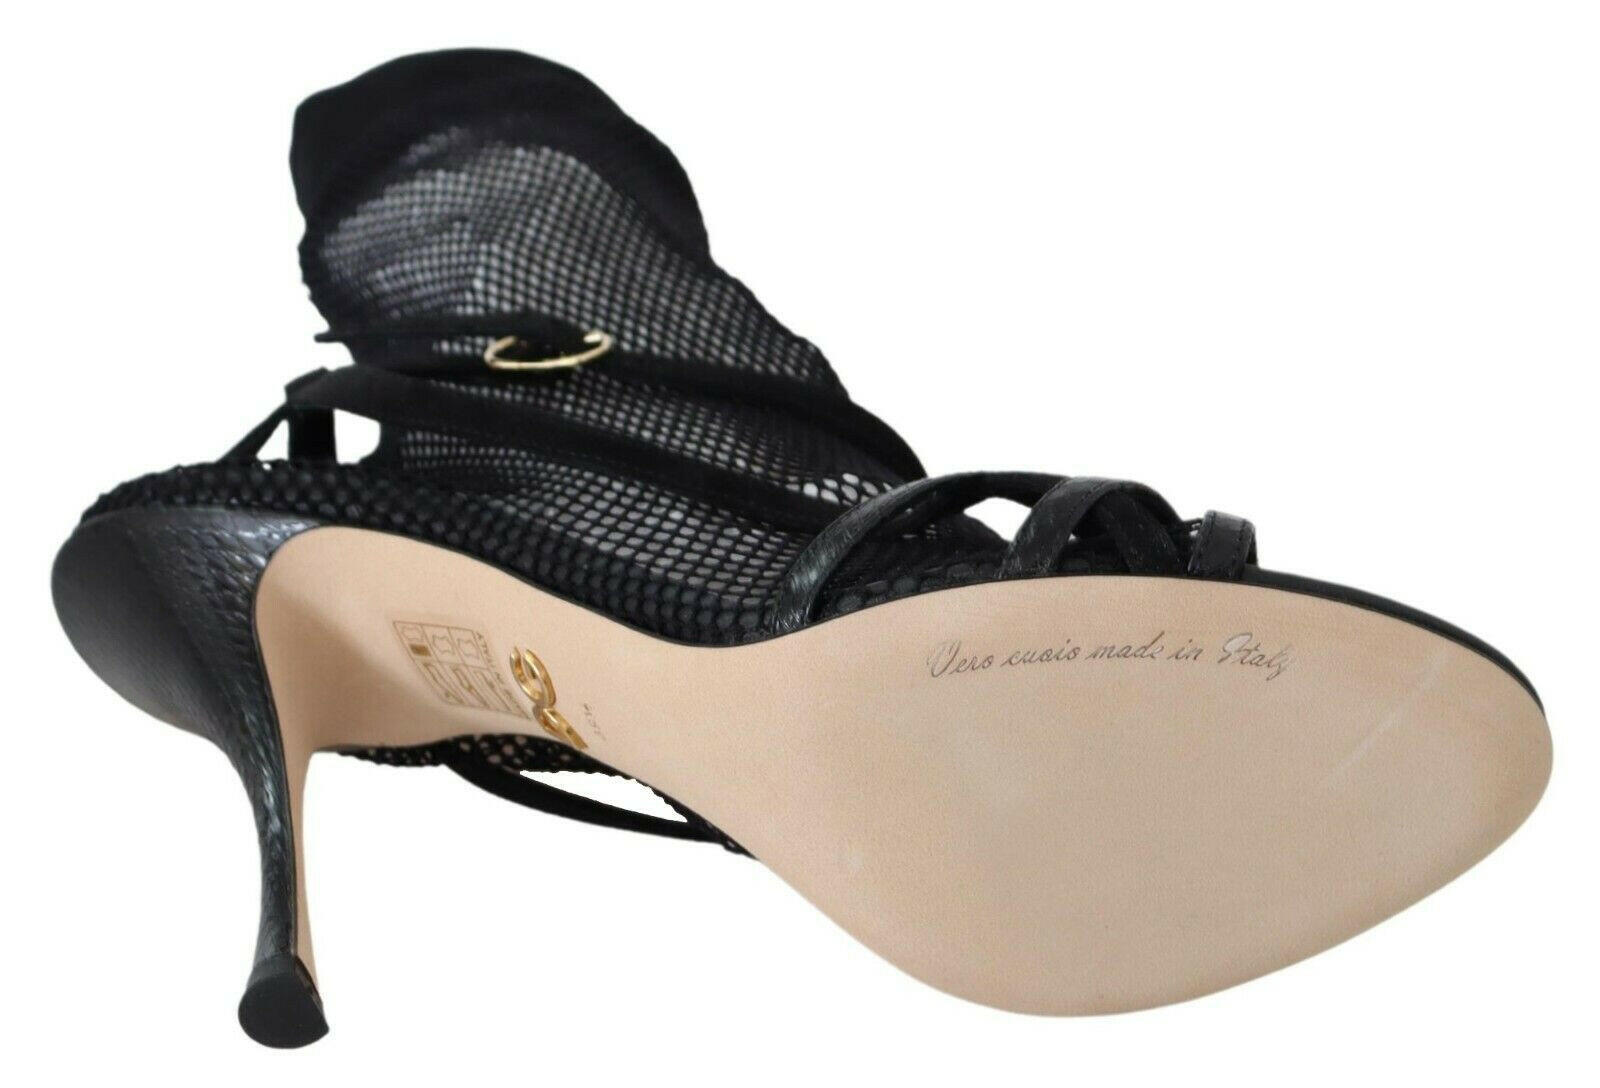 Dolce & Gabbana Black Suede Short Boots Sandals Shoes - GENUINE AUTHENTIC BRAND LLC  